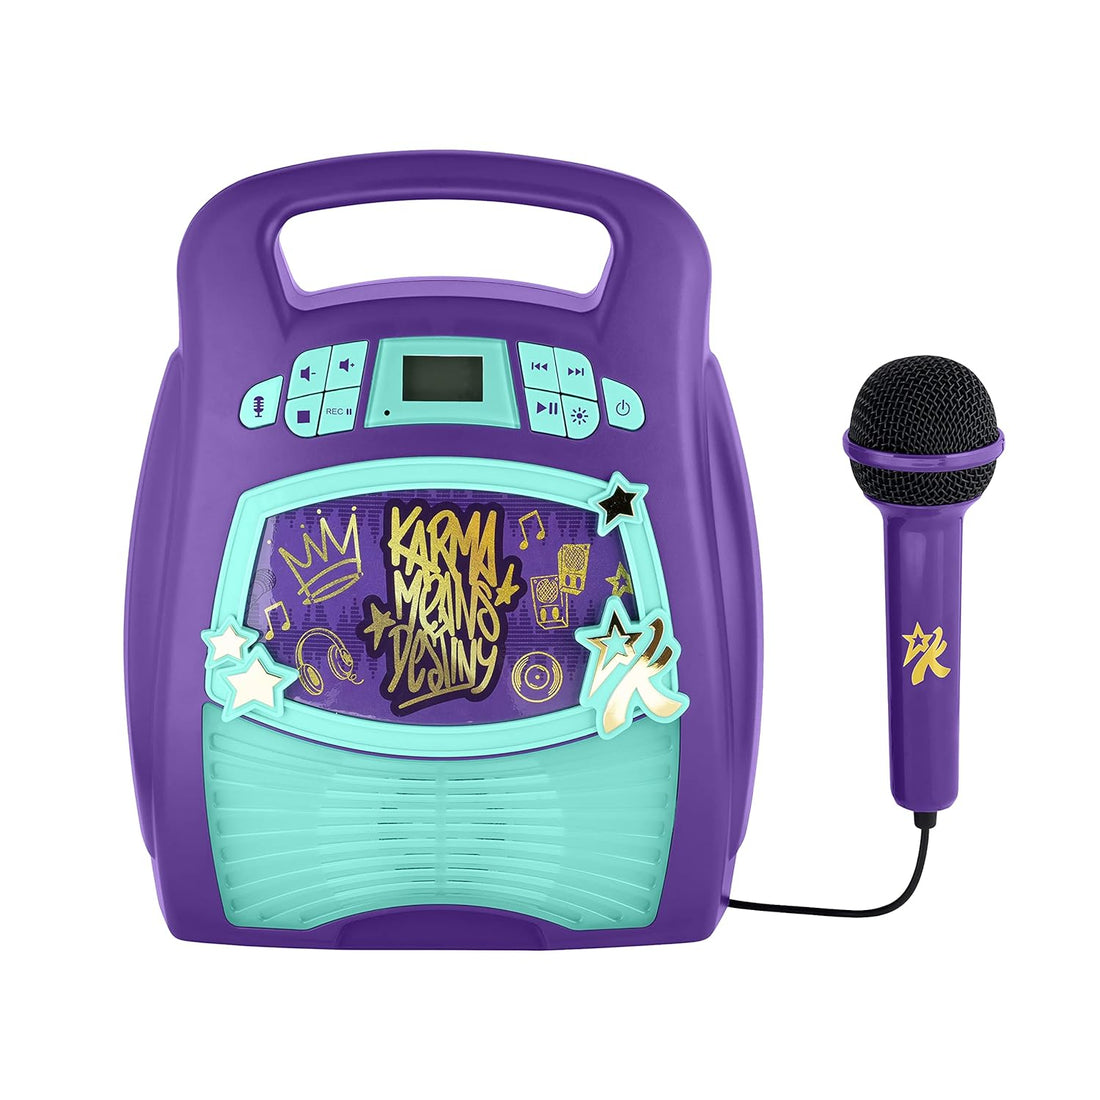 eKids Karmas World Karaoke Machine for Kids, Bluetooth Speaker with Microphone and Karaoke Recorder to Save and Share Performances via USB Port